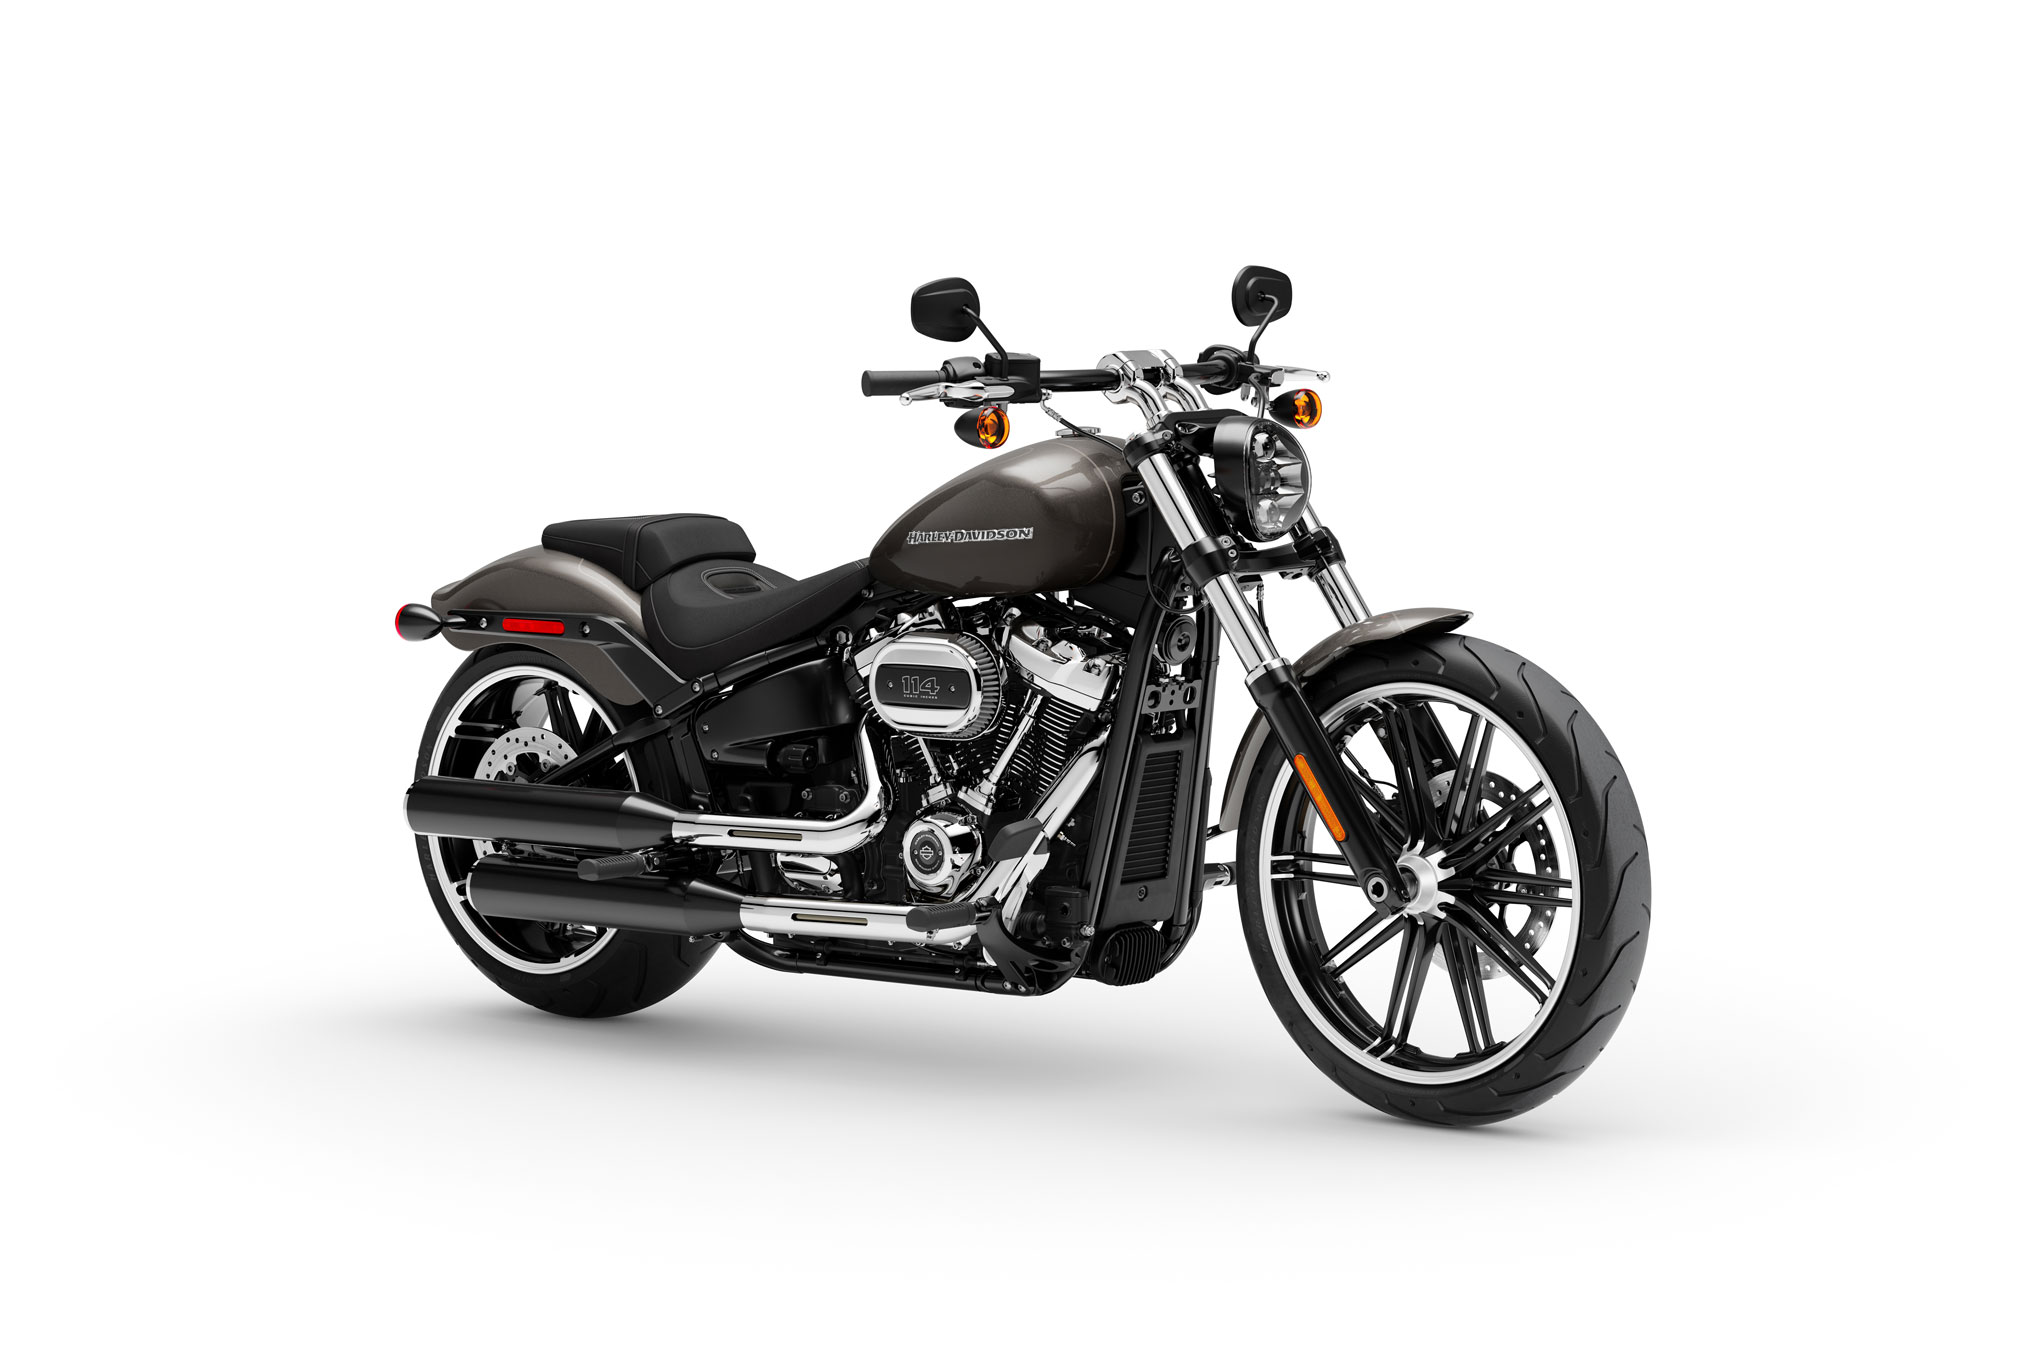  2019 Harley Davidson Breakout 114 Guide Total Motorcycle